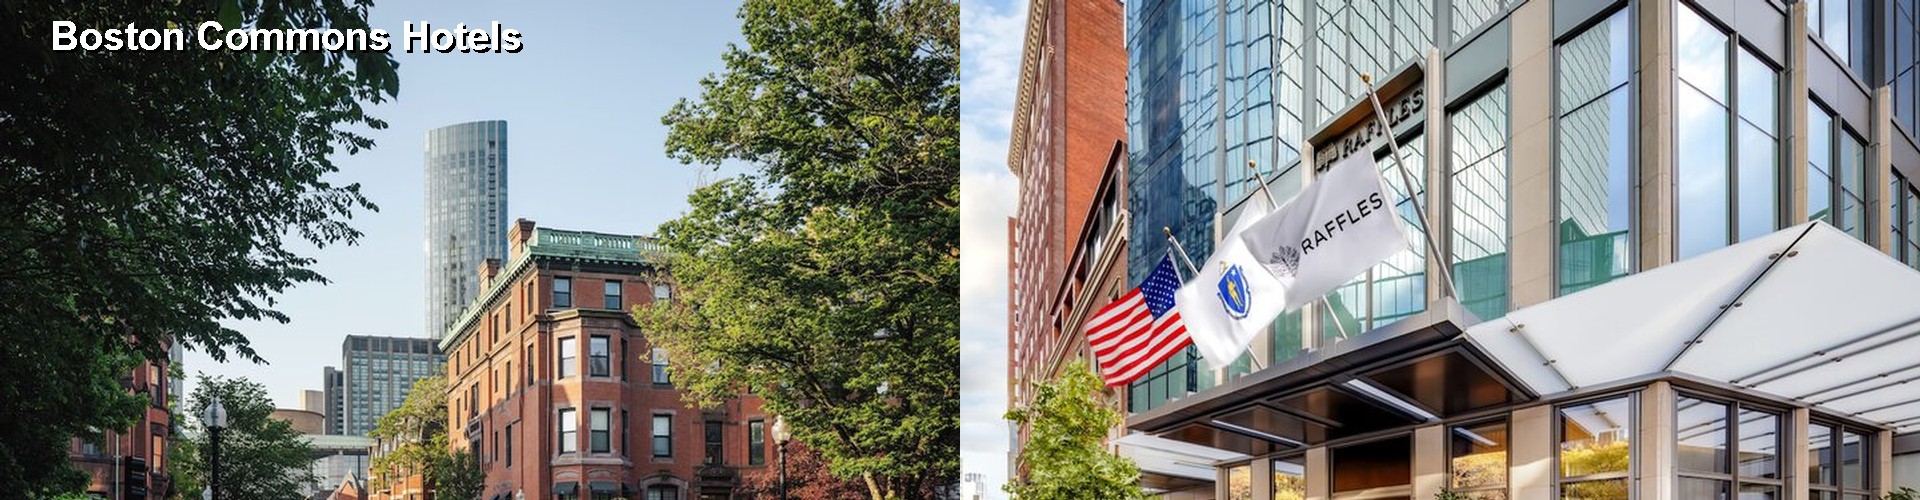 5 Best Hotels near Boston Commons